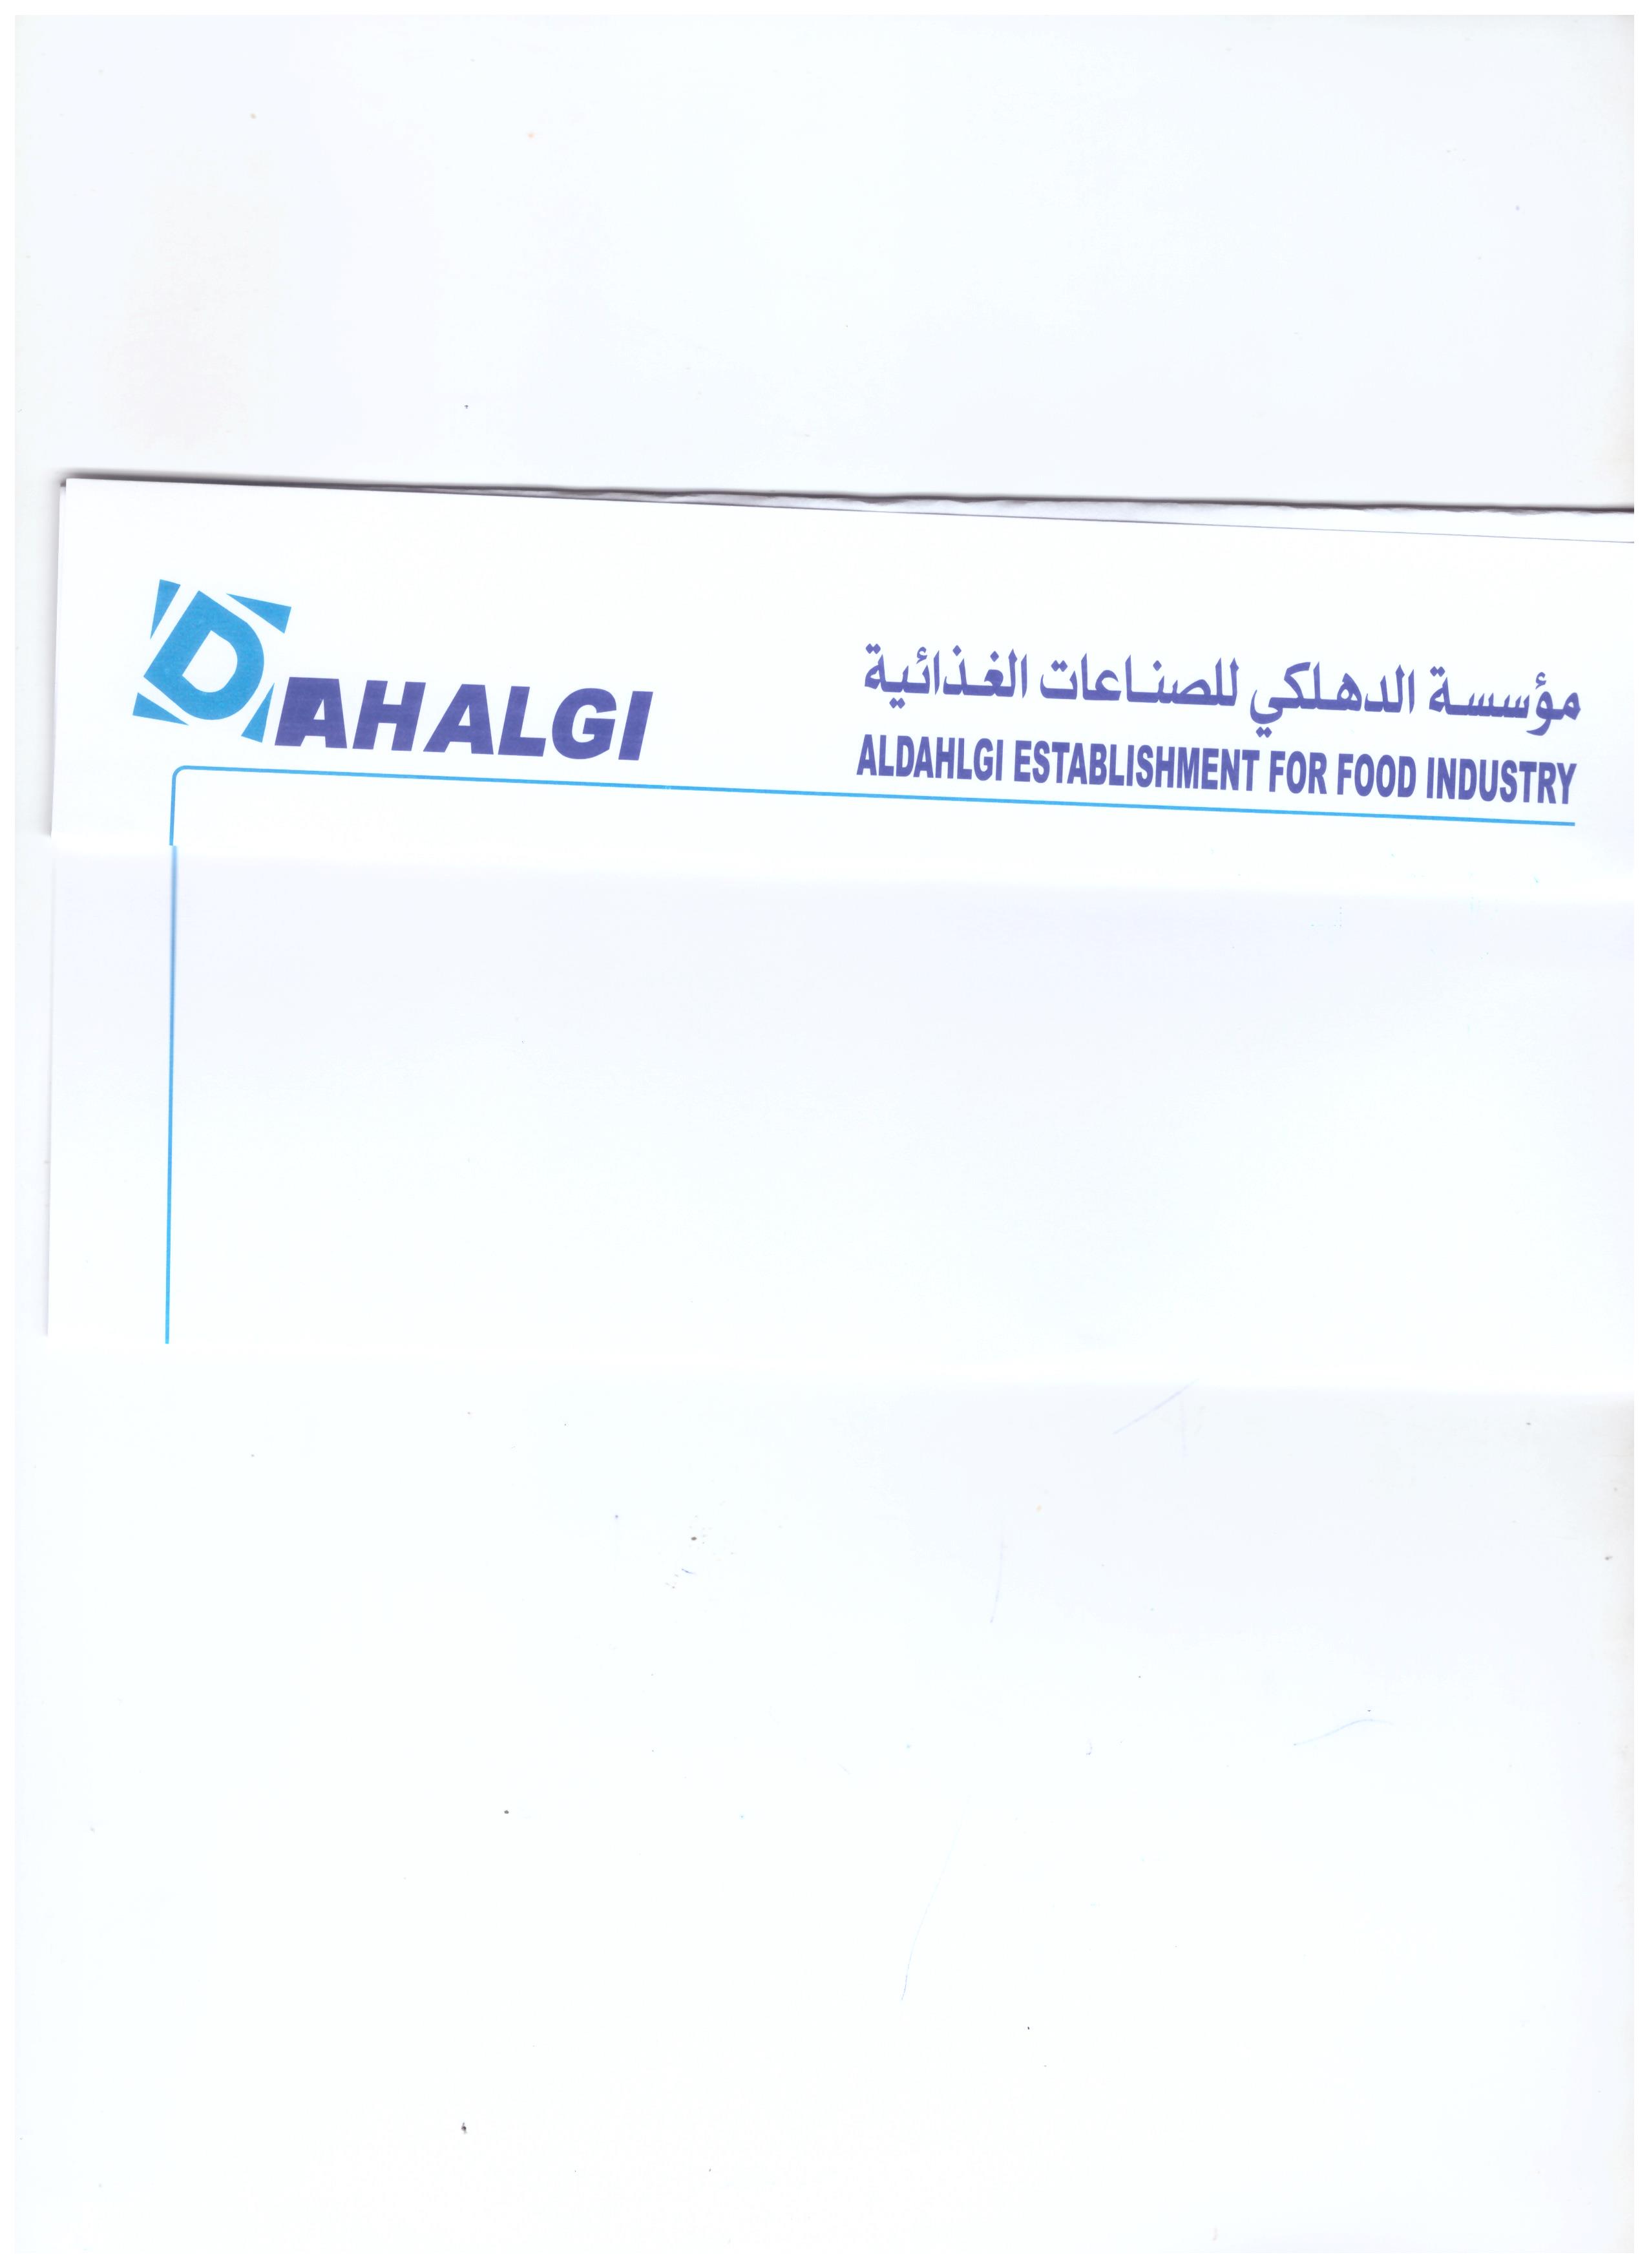 Al dahlgi Establishment For Food Industry